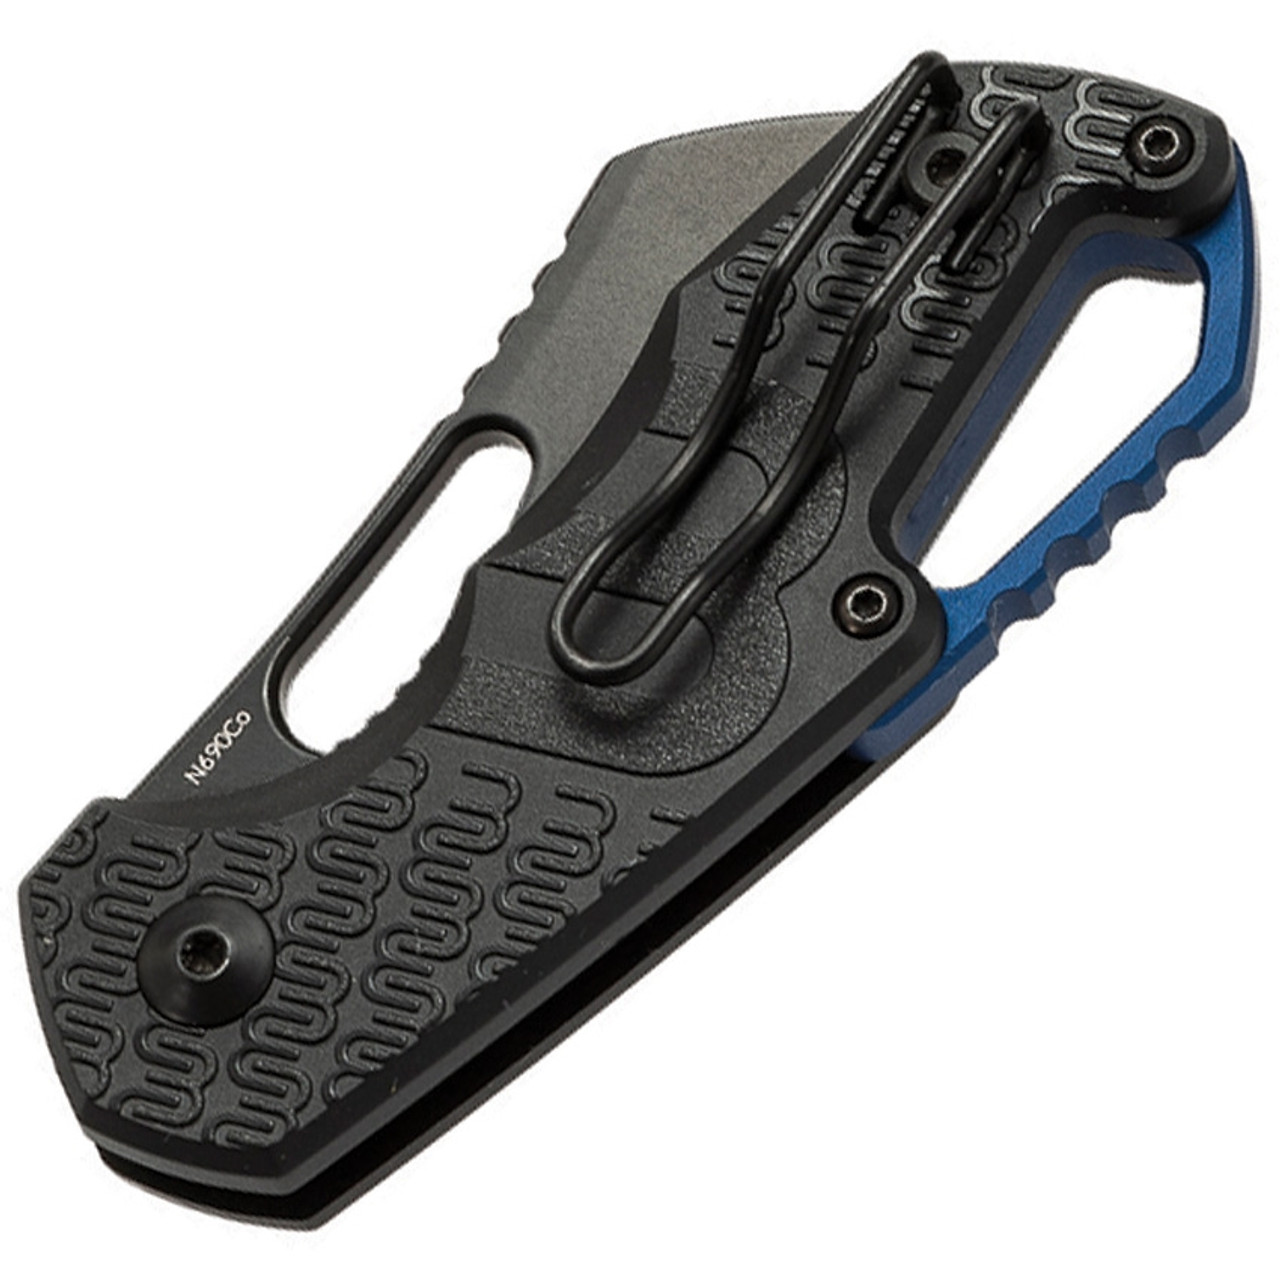 MKM - Maniago Knife Makers Isonzo Black Coated Cleaver Blade, Black FRN Handle, Blue Aluminium Spacer